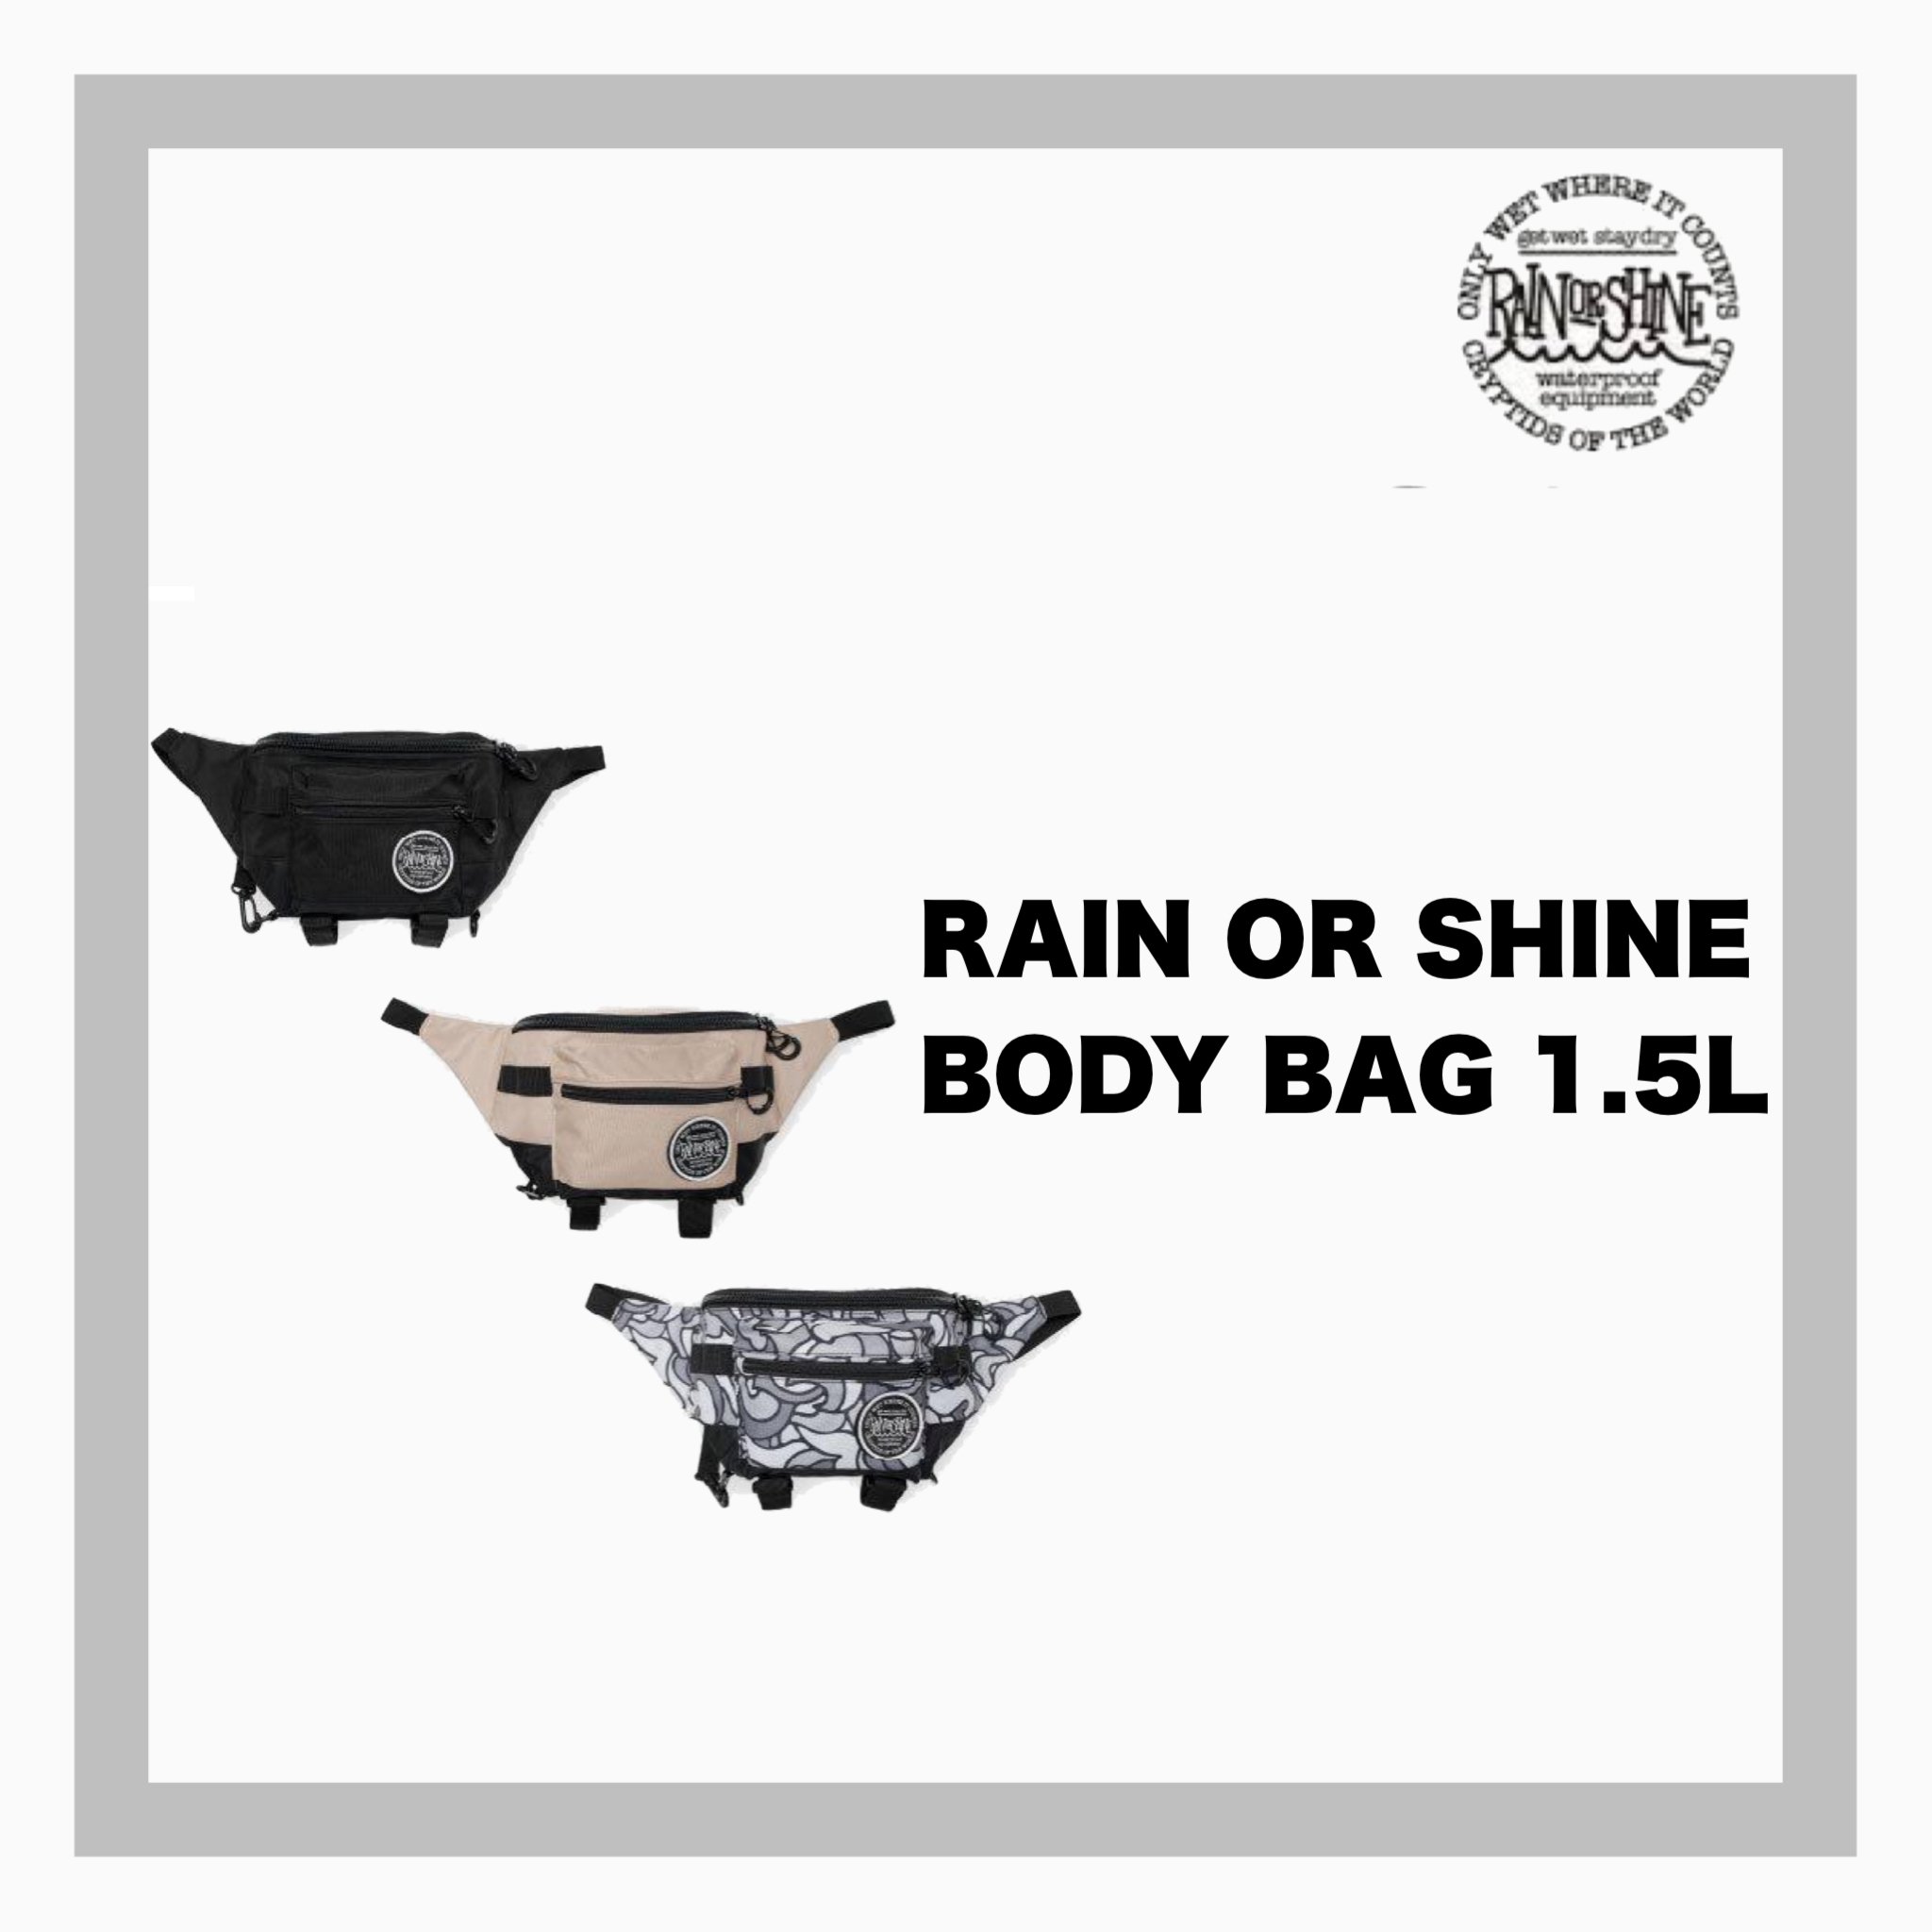 RAIN OR SHINEBODY BAG 1.5L